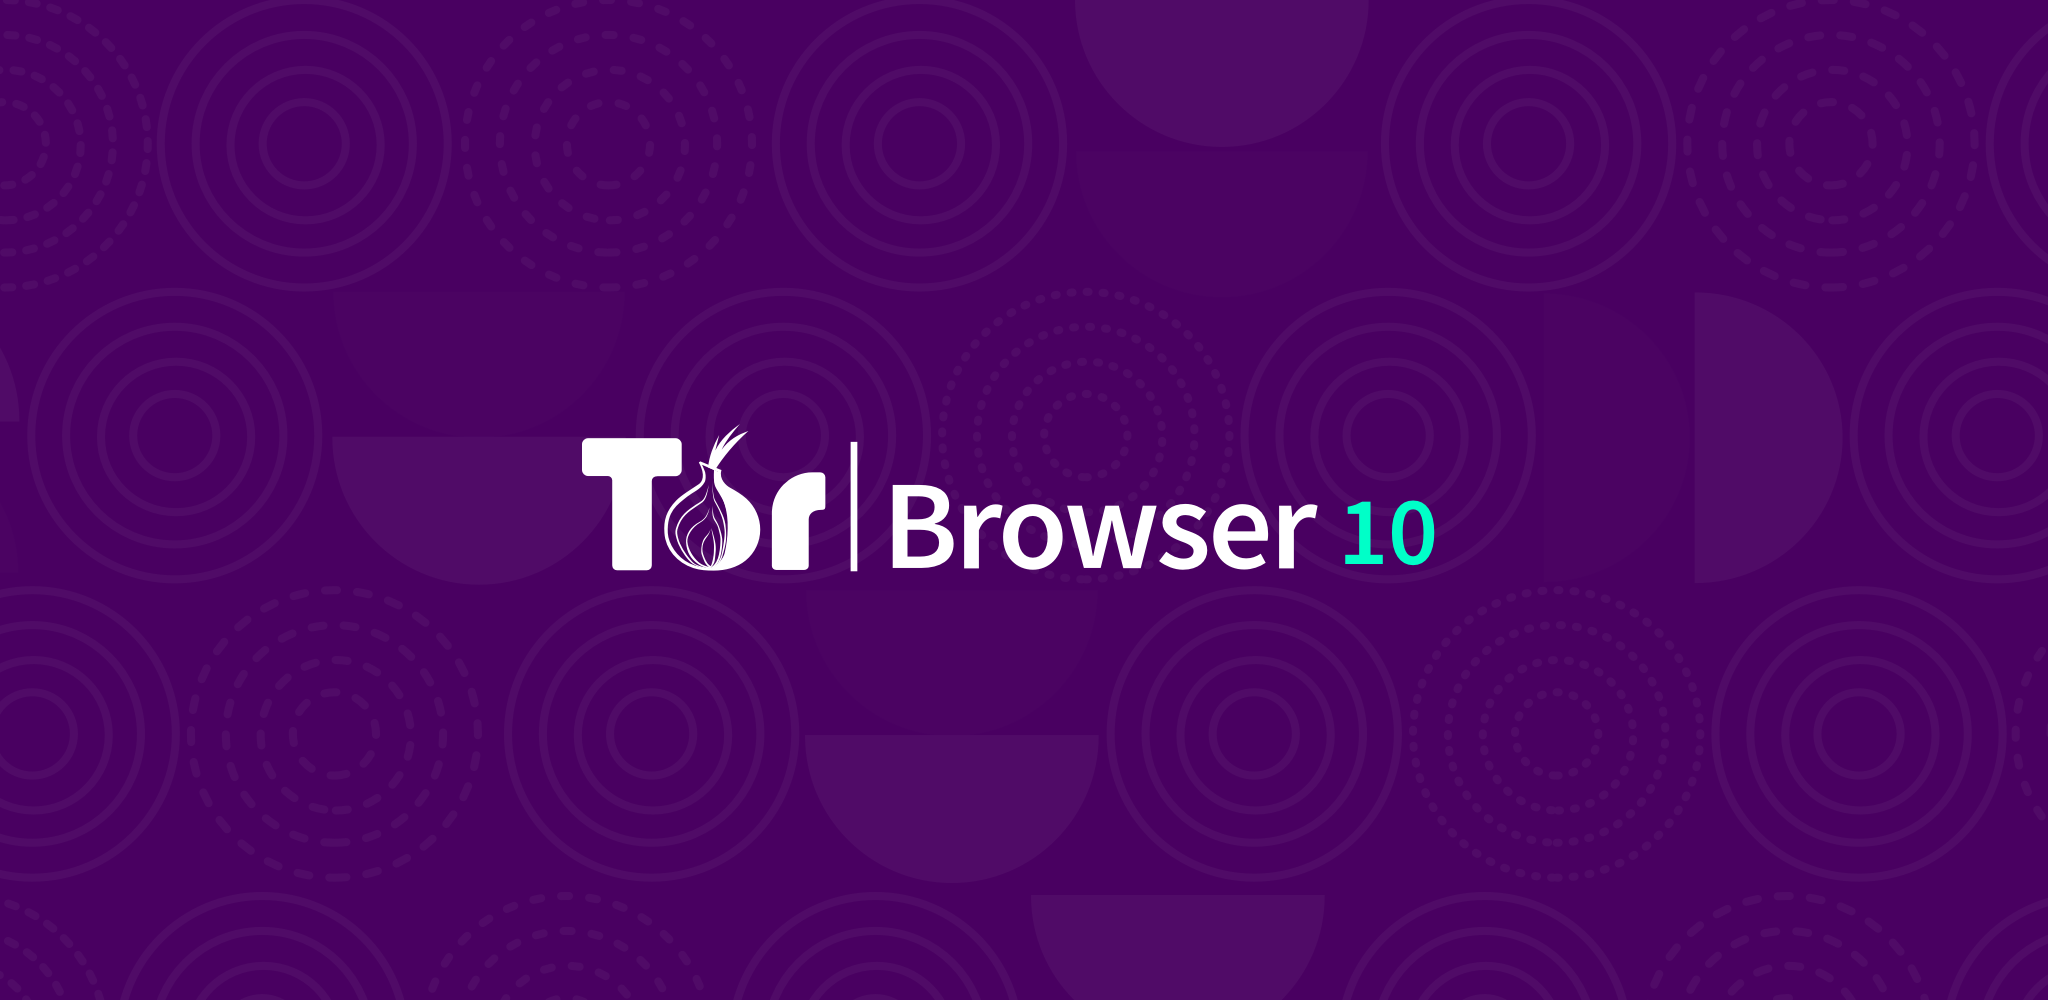 Тор браузер минт 17 gidra tor browser для windows